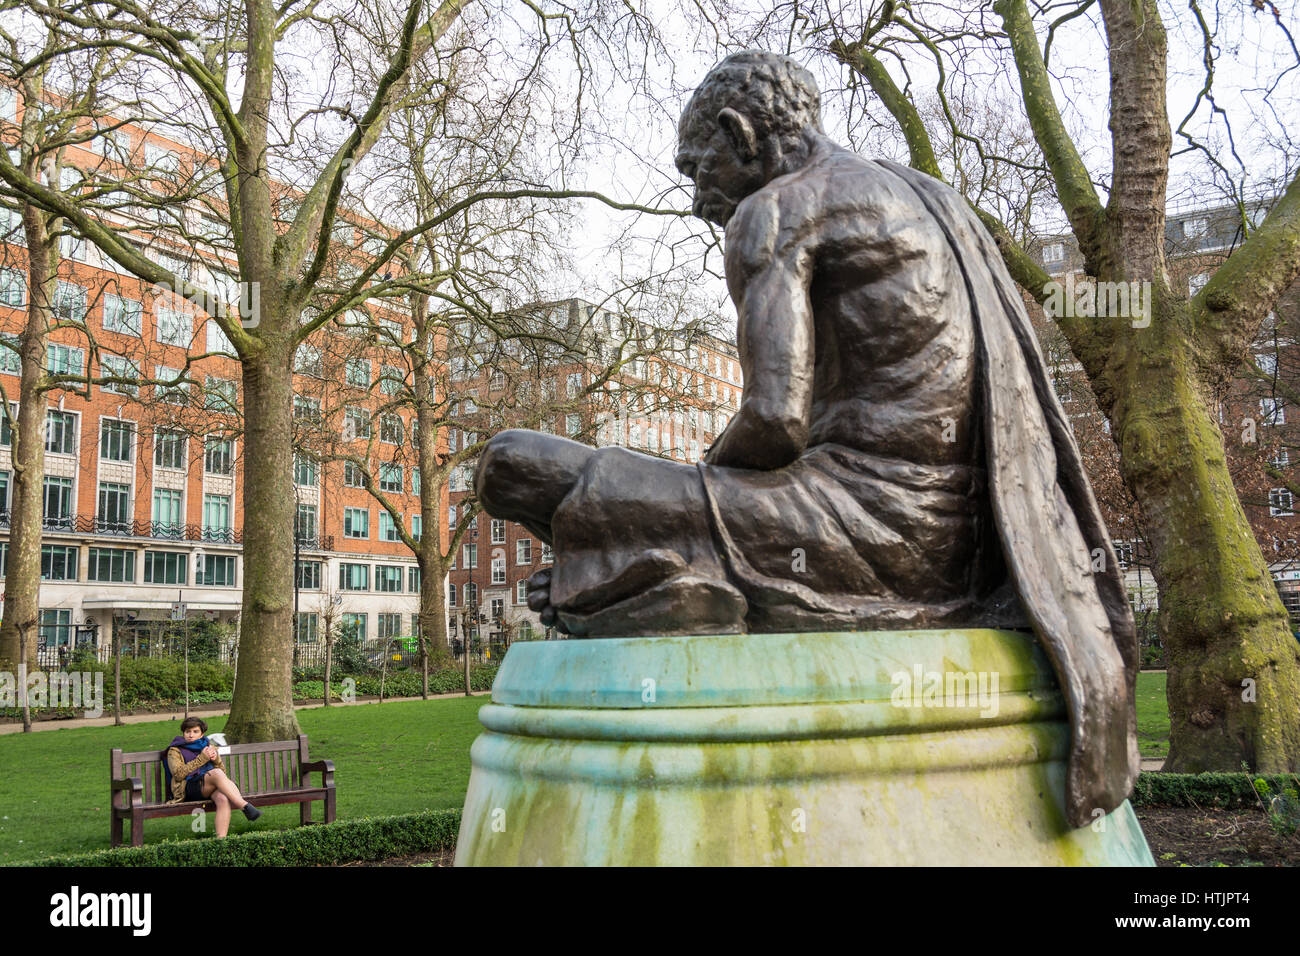 Statue de Mahatma Gandhi, sculptée par Fredda, brillant à Tavistock Square, Londres, Royaume-Uni. Banque D'Images